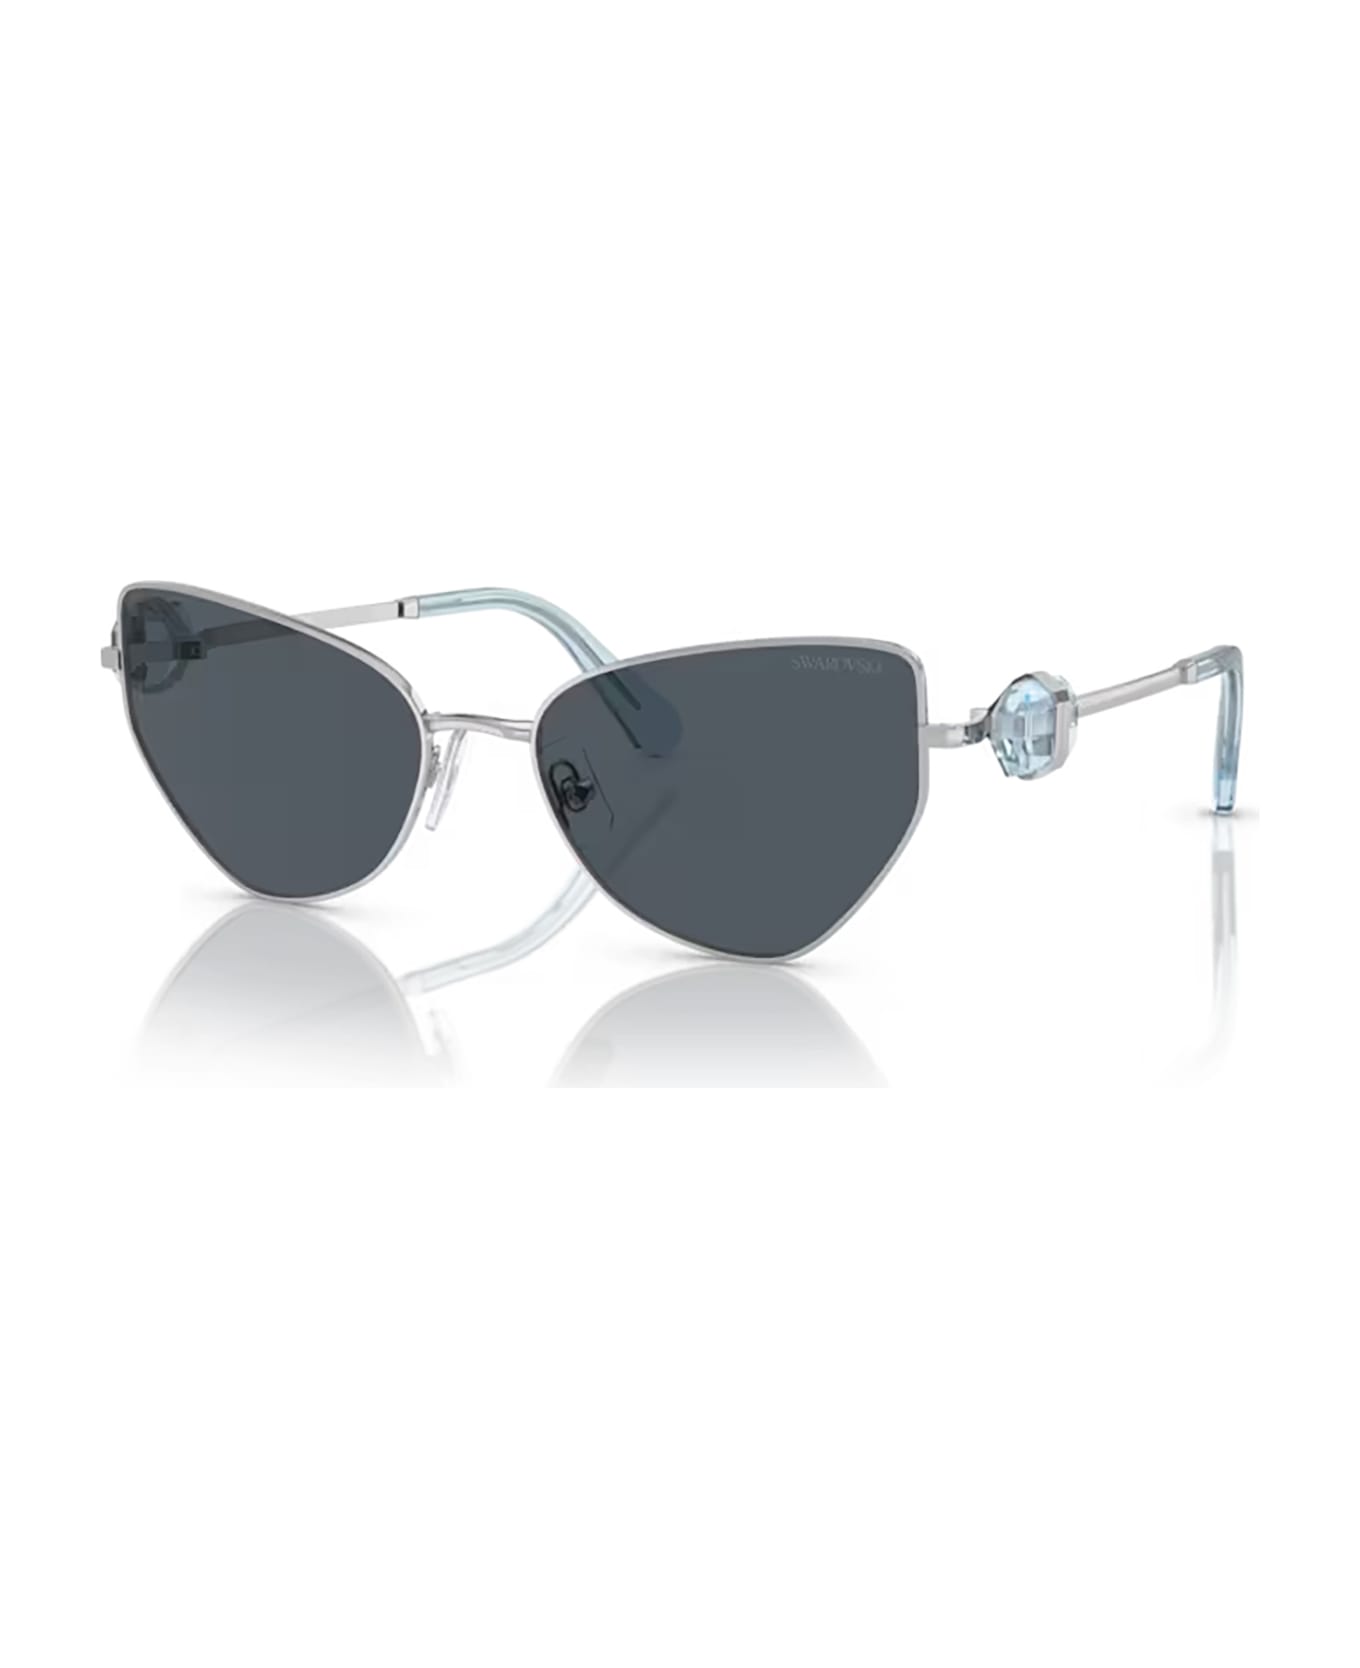 Swarovski Sk7003 Silver Sunglasses - Silver